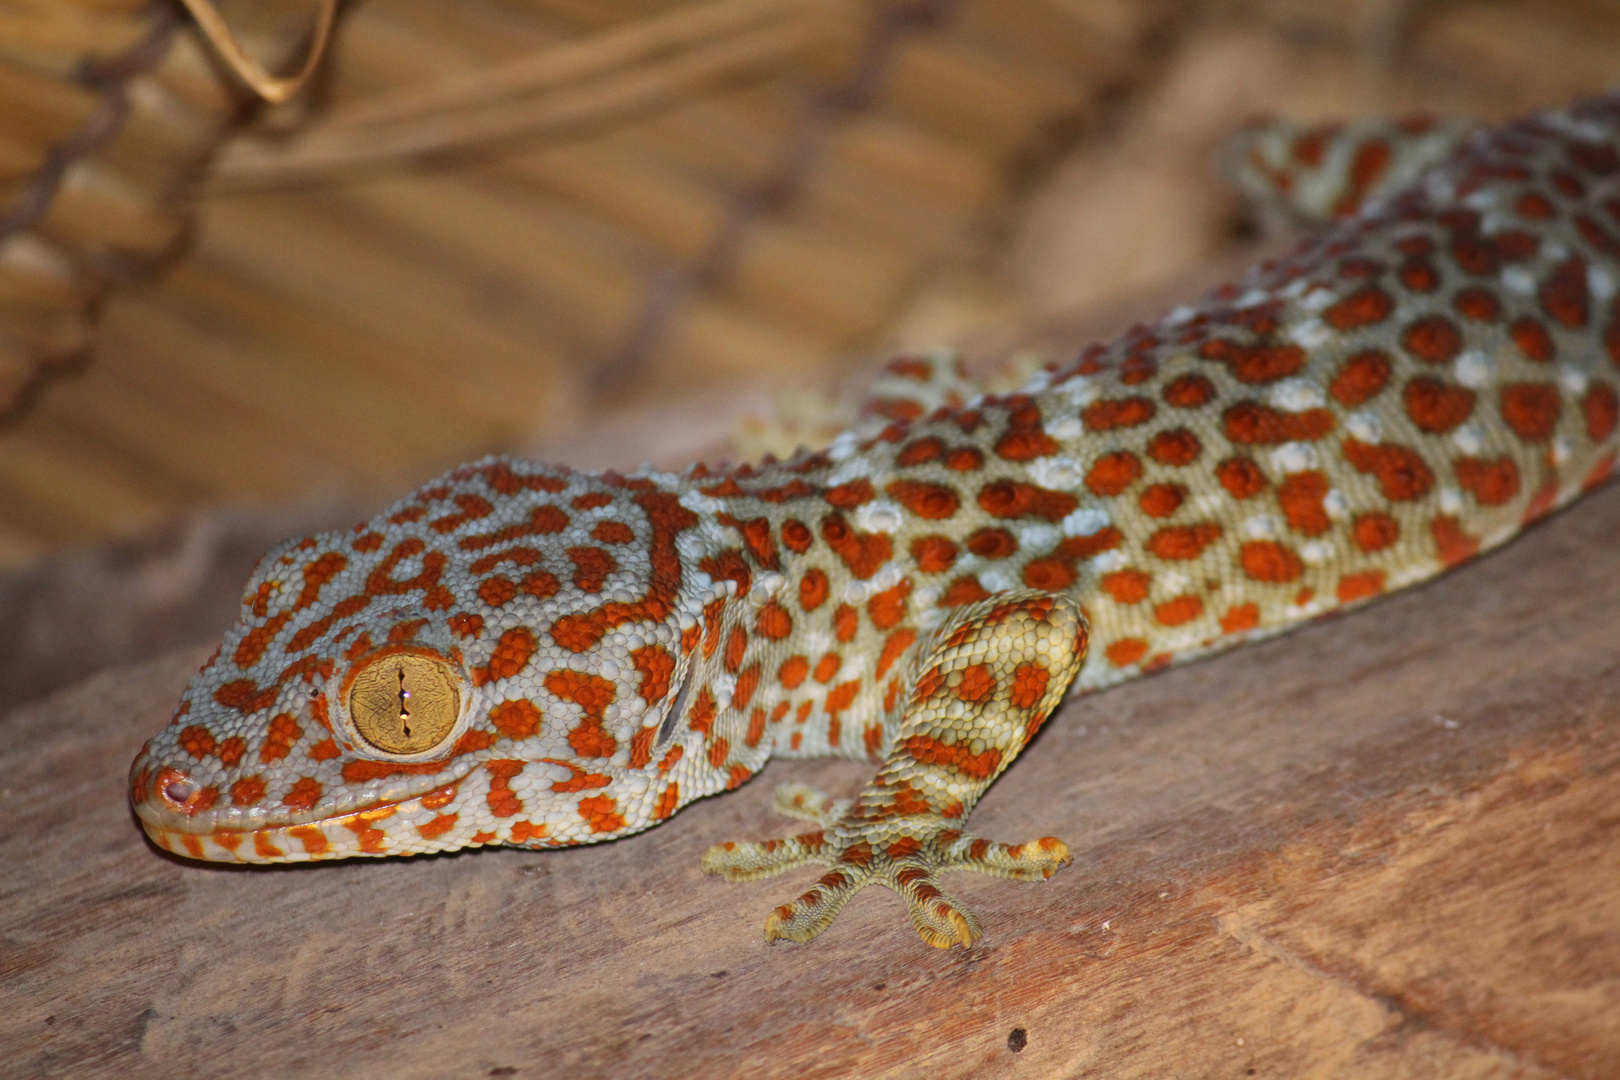 Insect Hunter (Tokay Gecko)